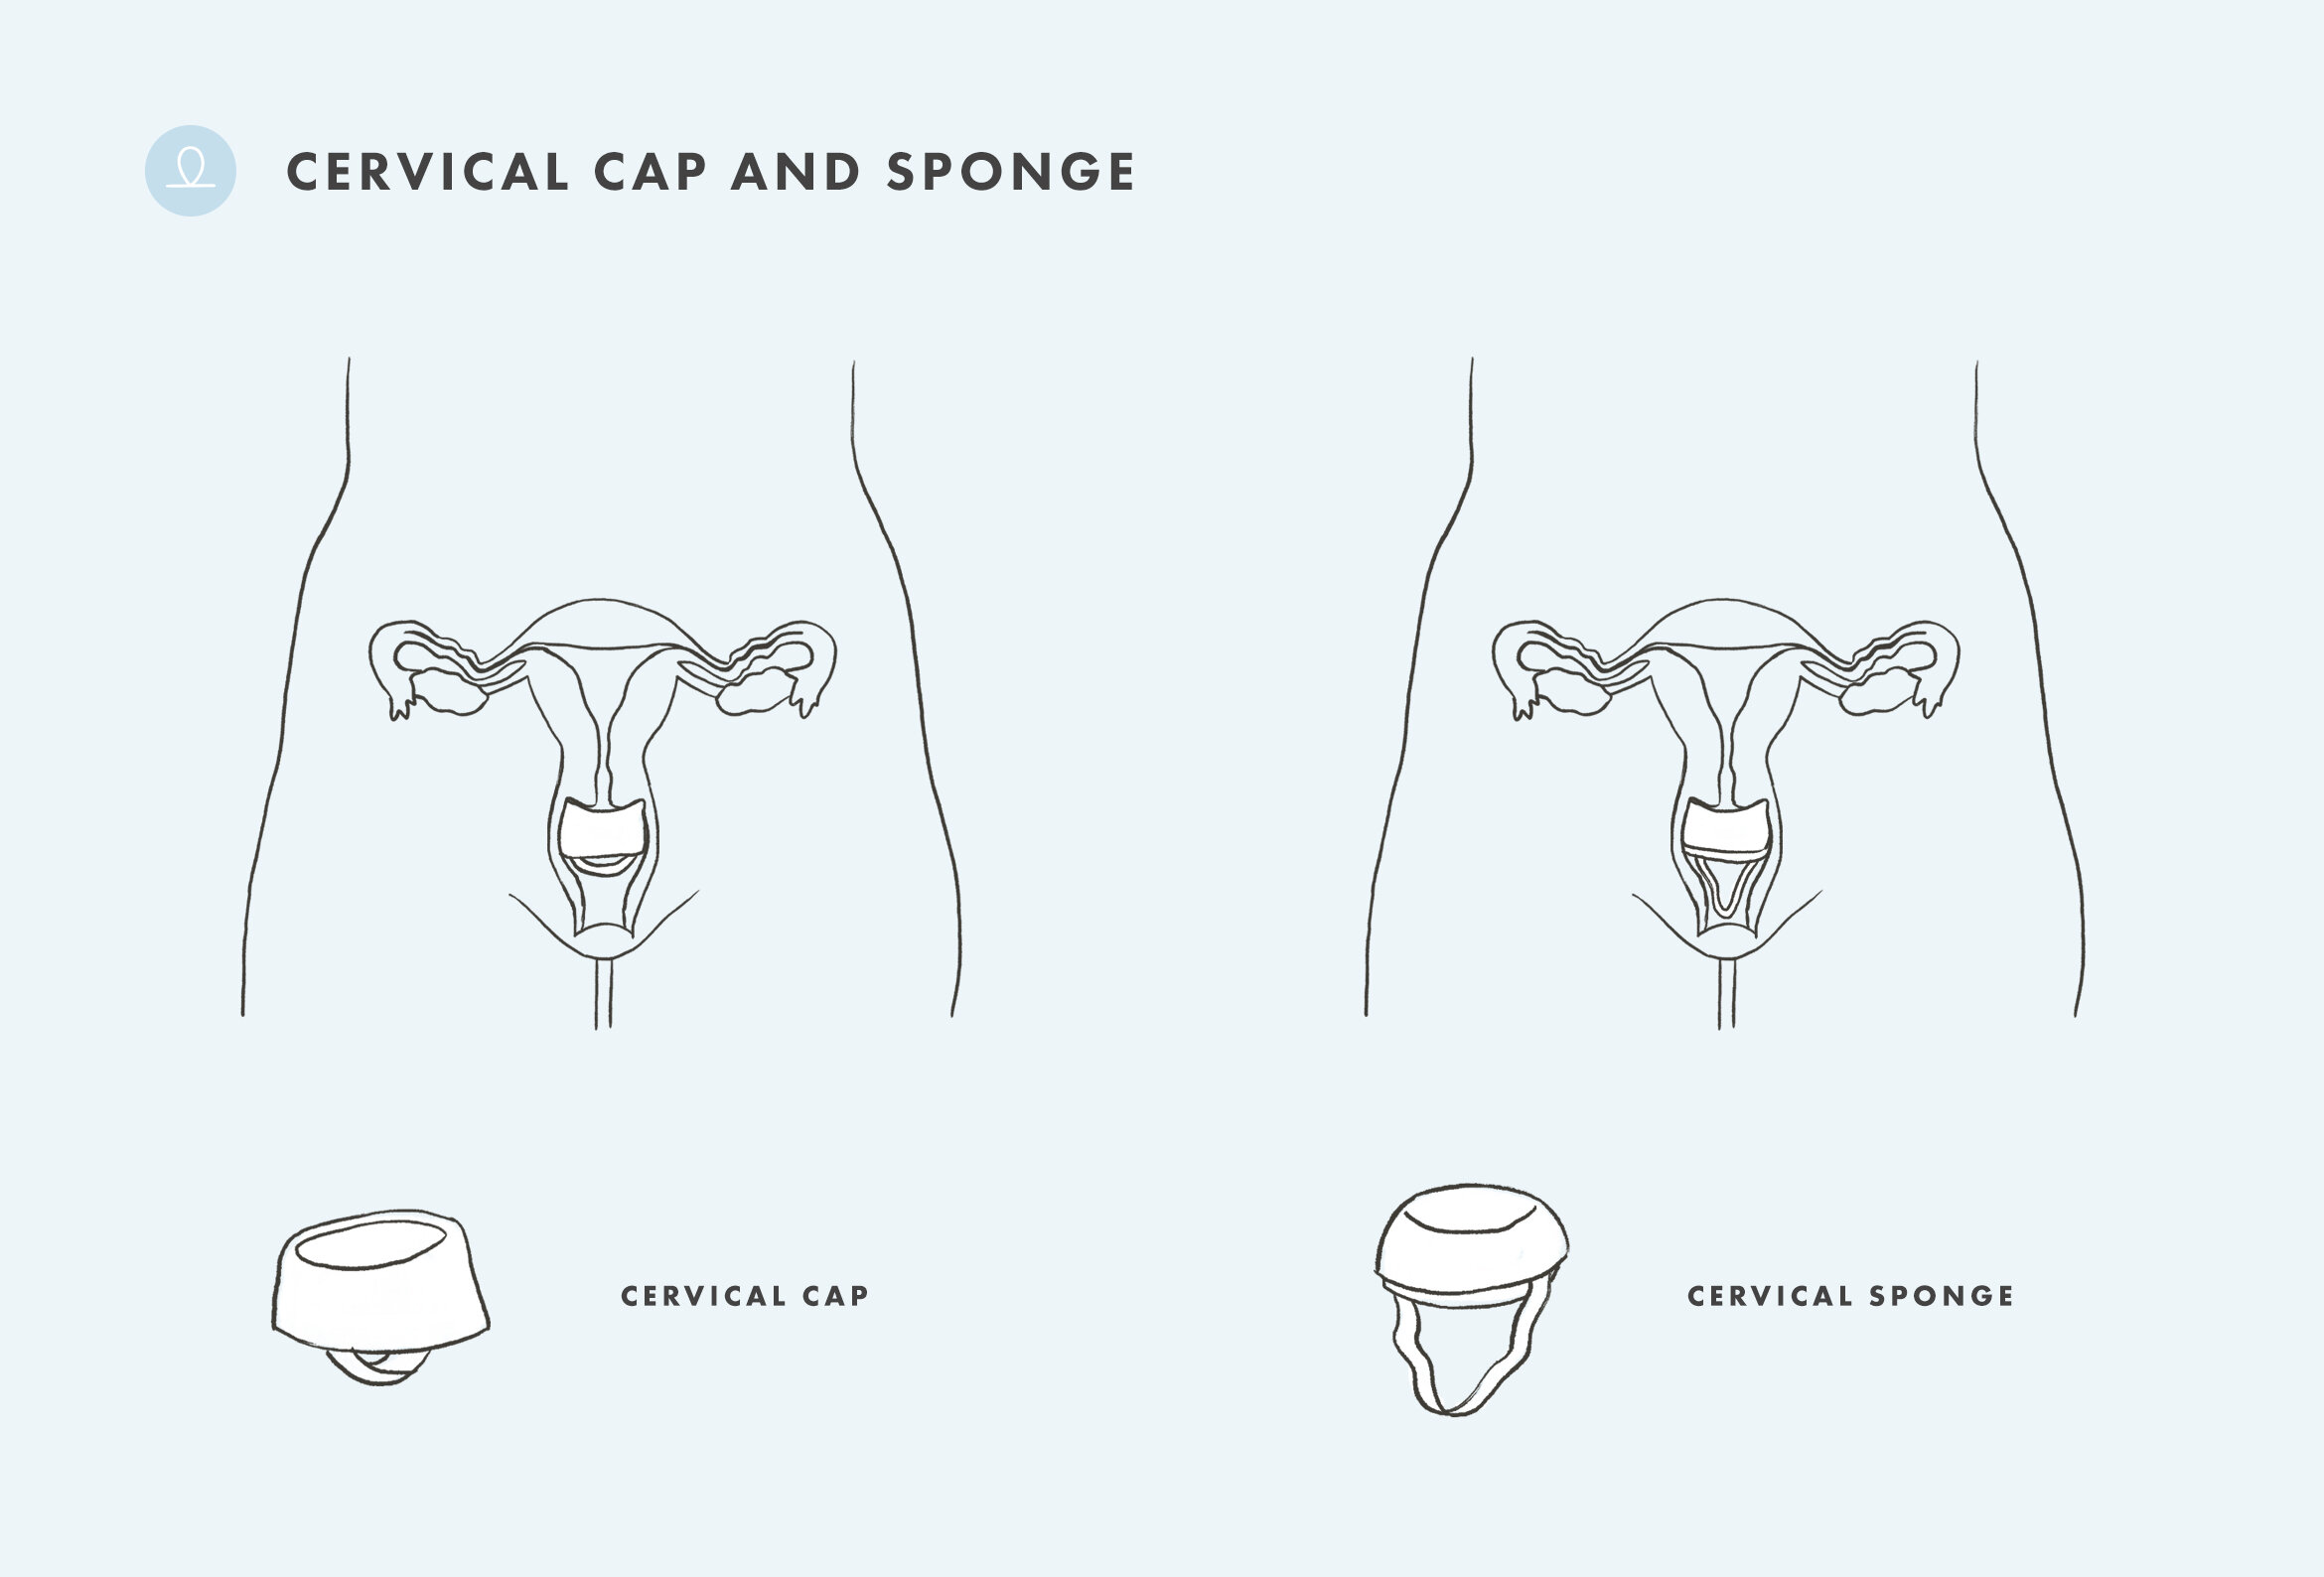 Evve-The Contraception Series-Cervical Cap and Sponge page-diagram 1102 @2x.jpg